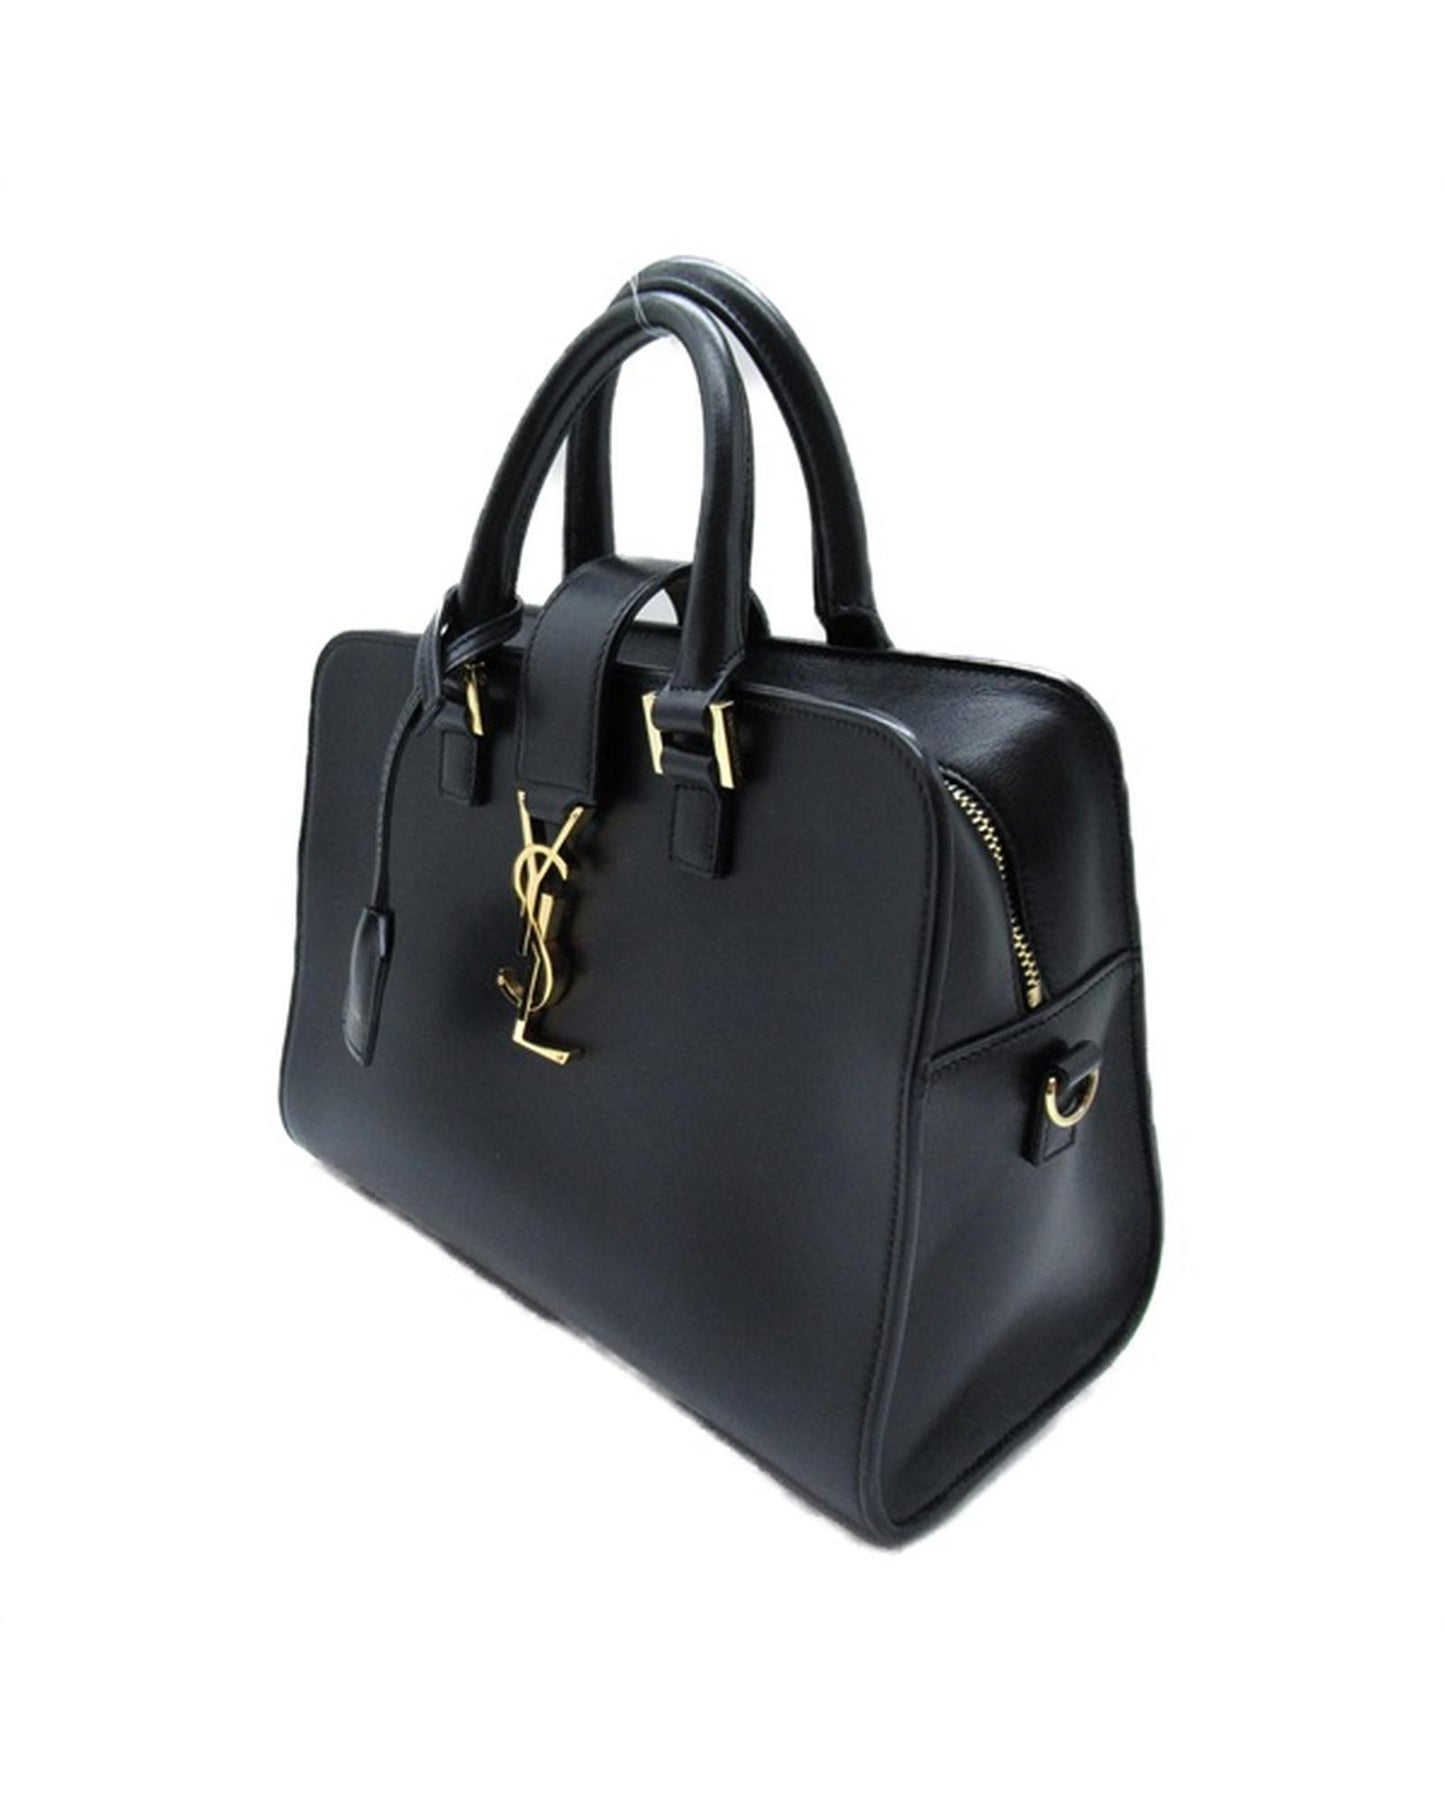 Yves Saint Laurent Women's YSL Monogram Leather Baby Cabas Bag in Black in Black